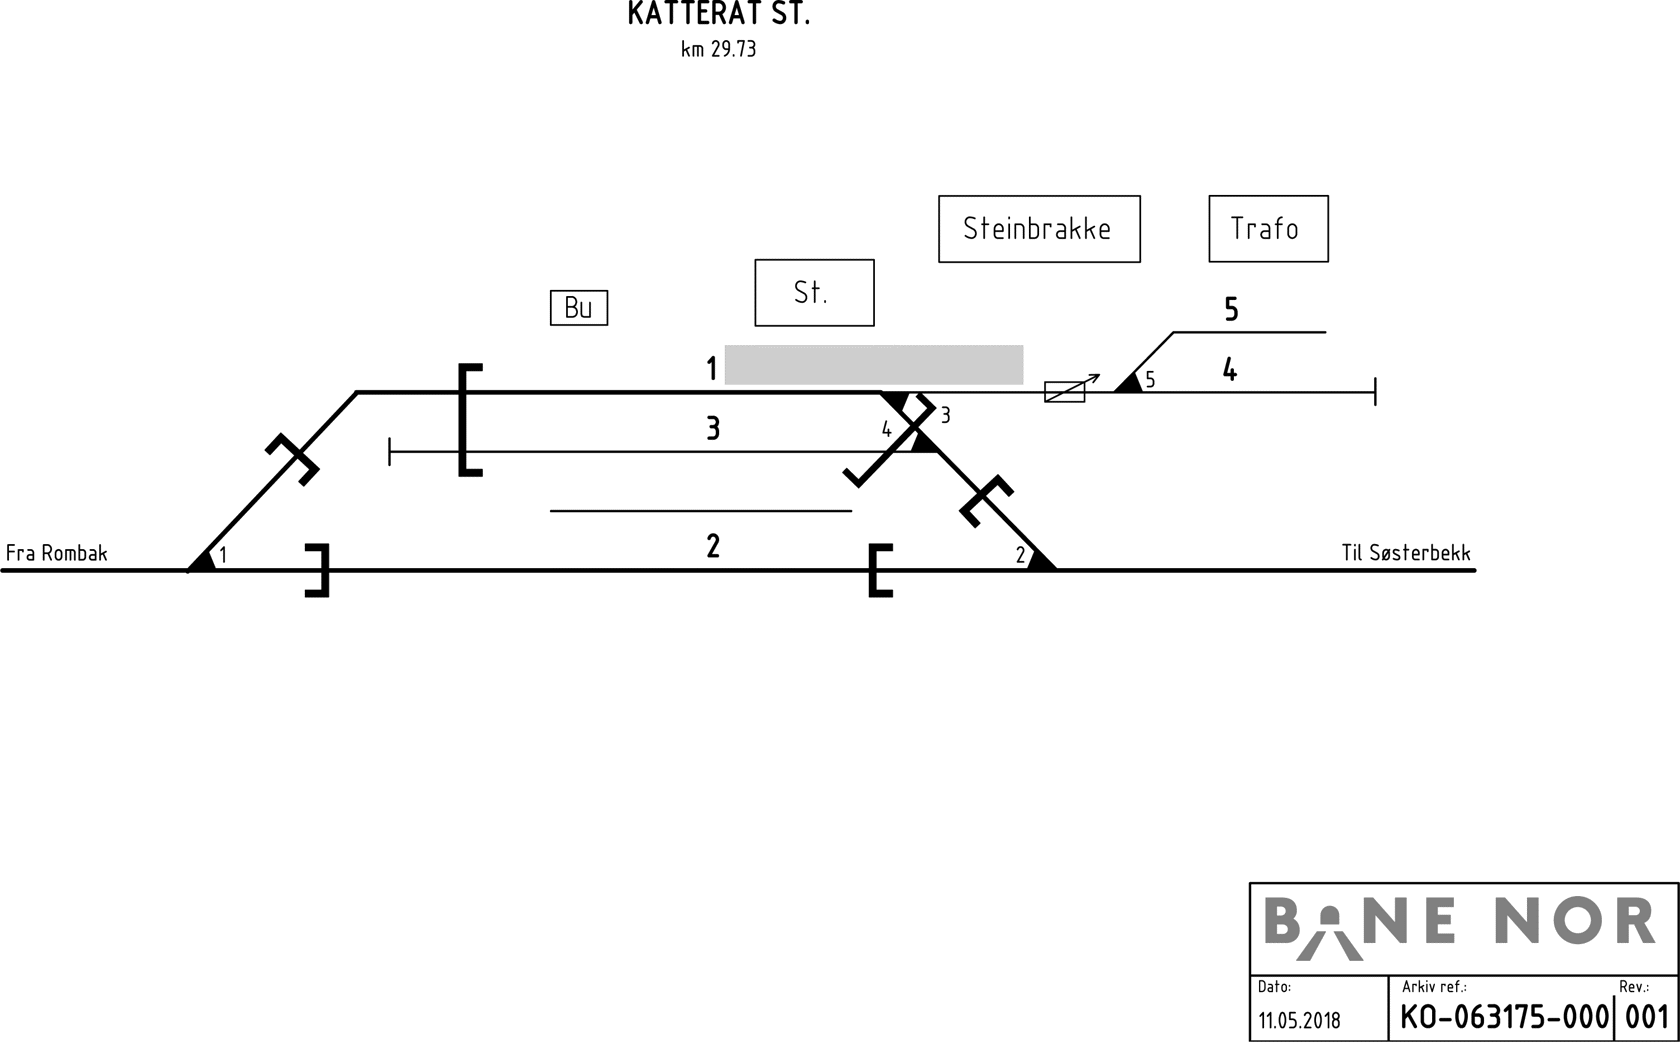 Track plan Katterat station